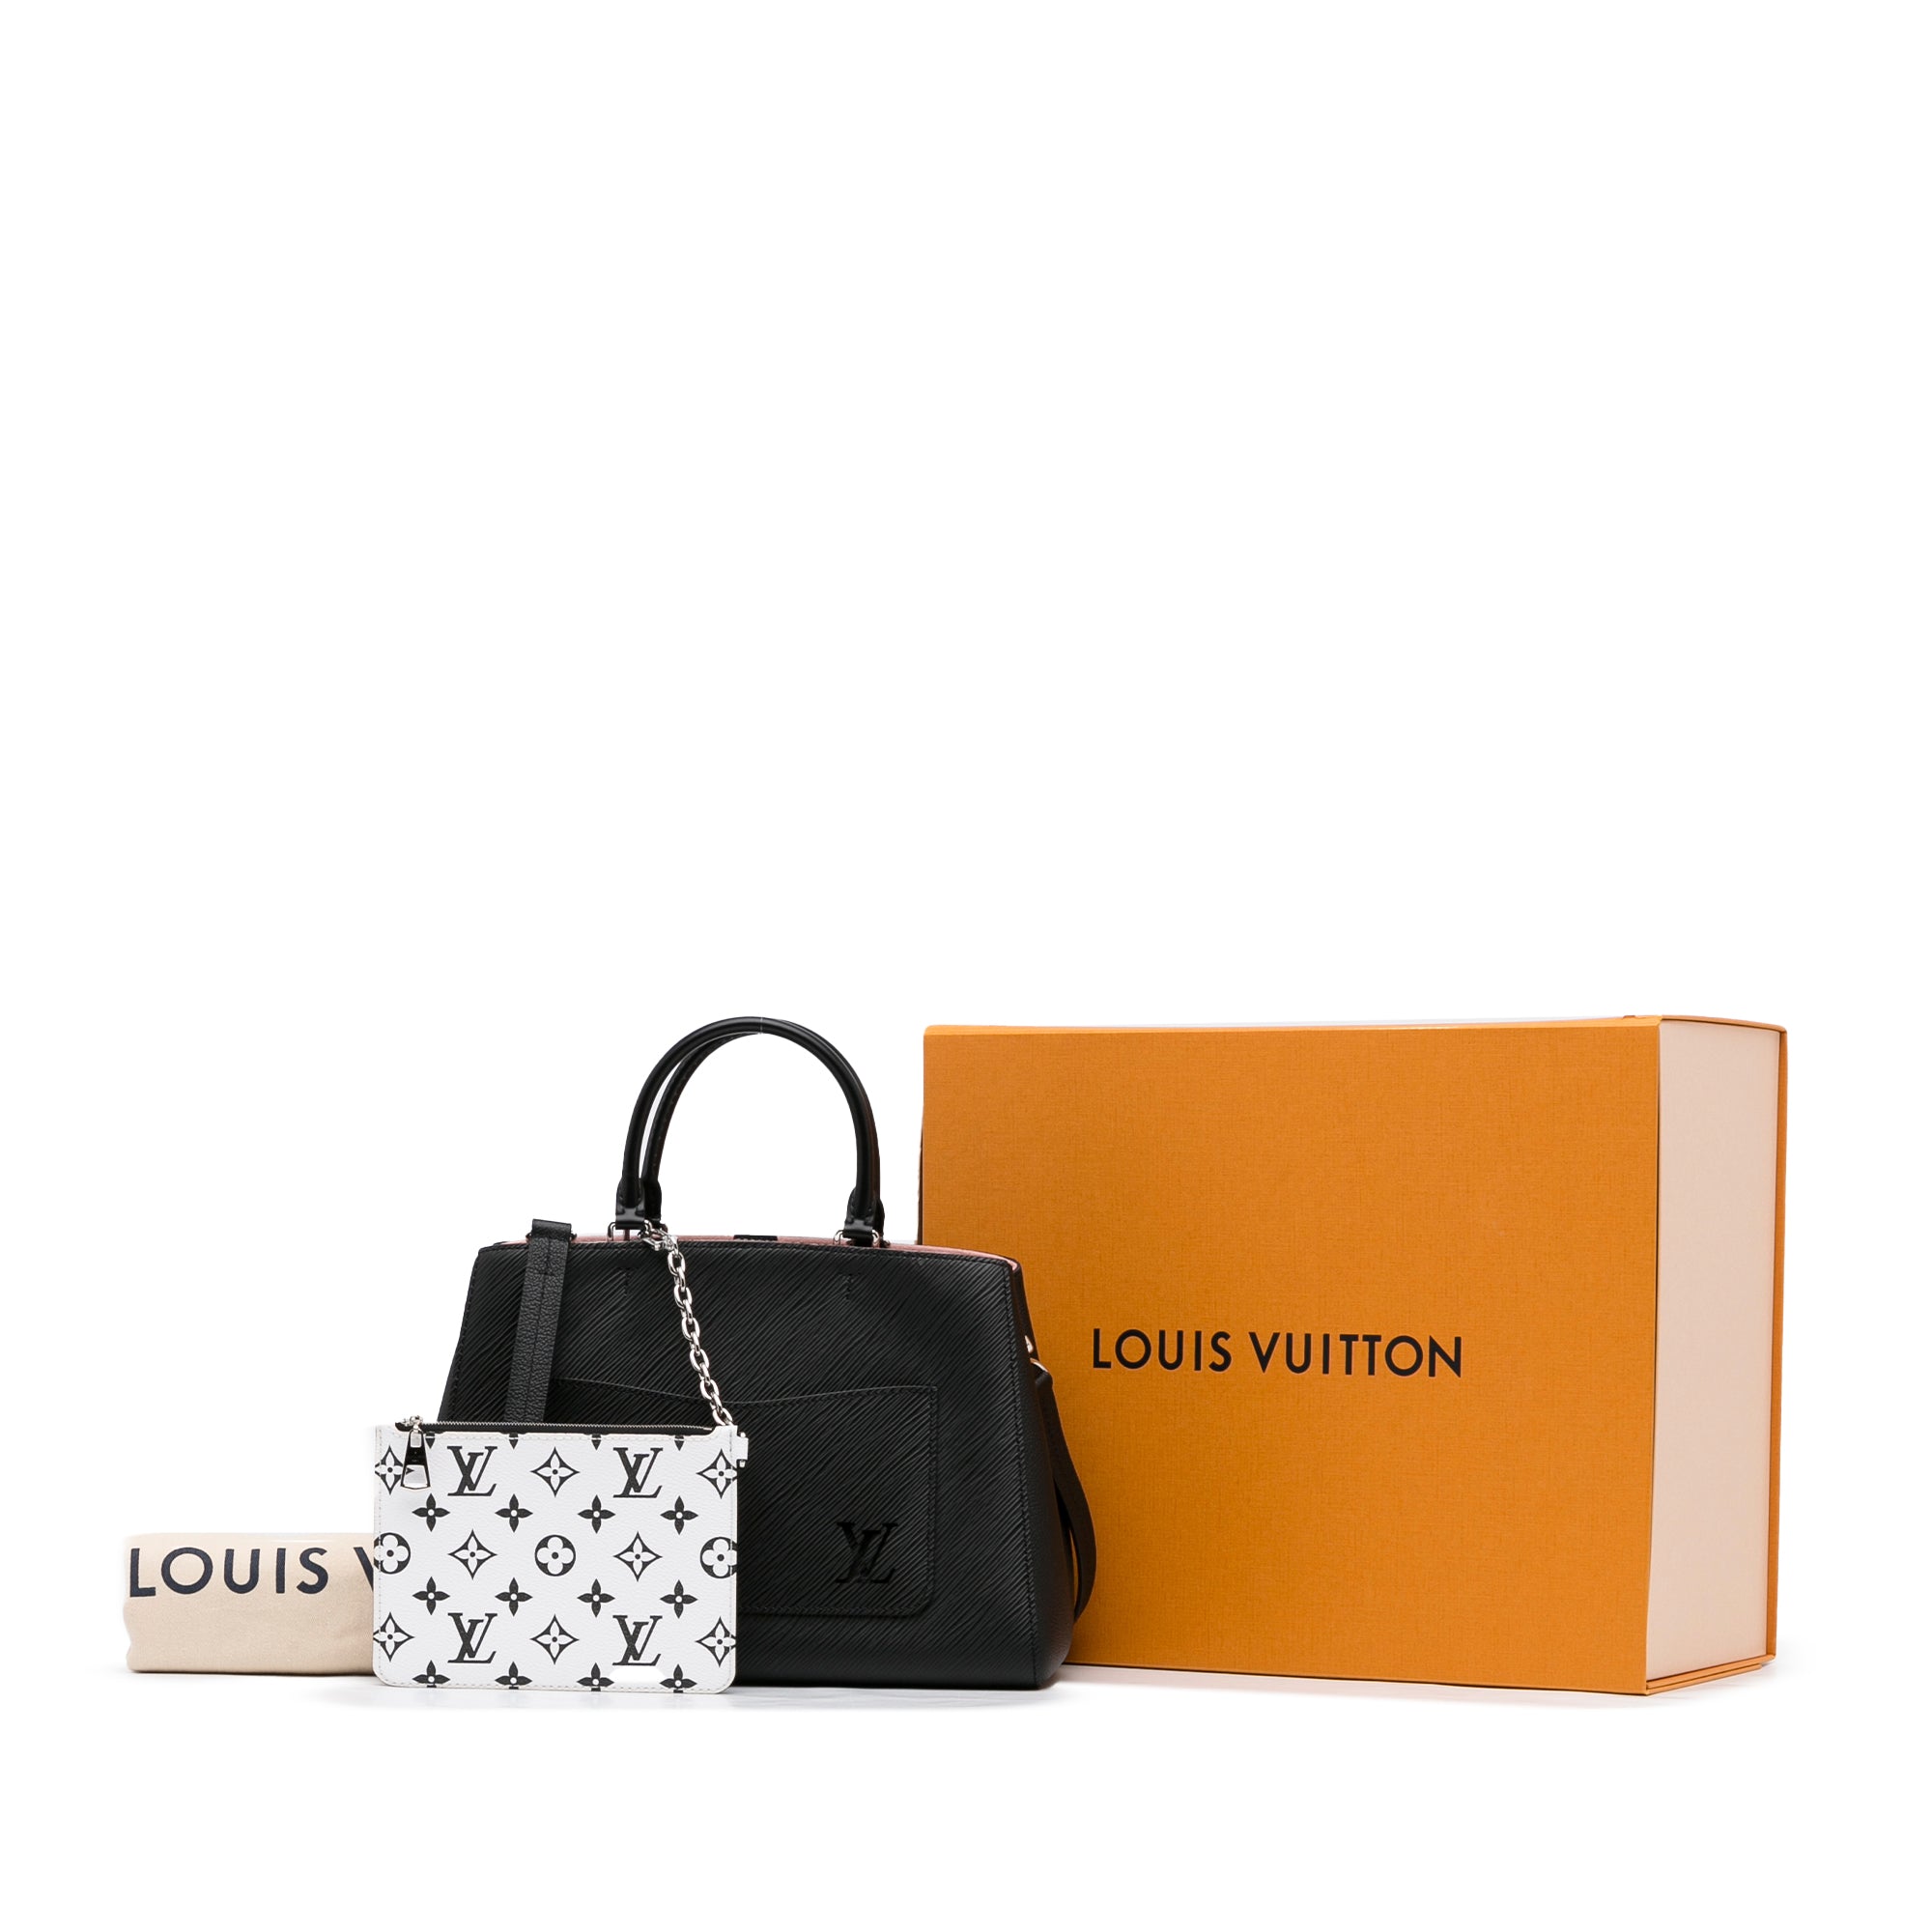 Louis Vuitton Cluny BB: First Impressions & Alma BB Comparison